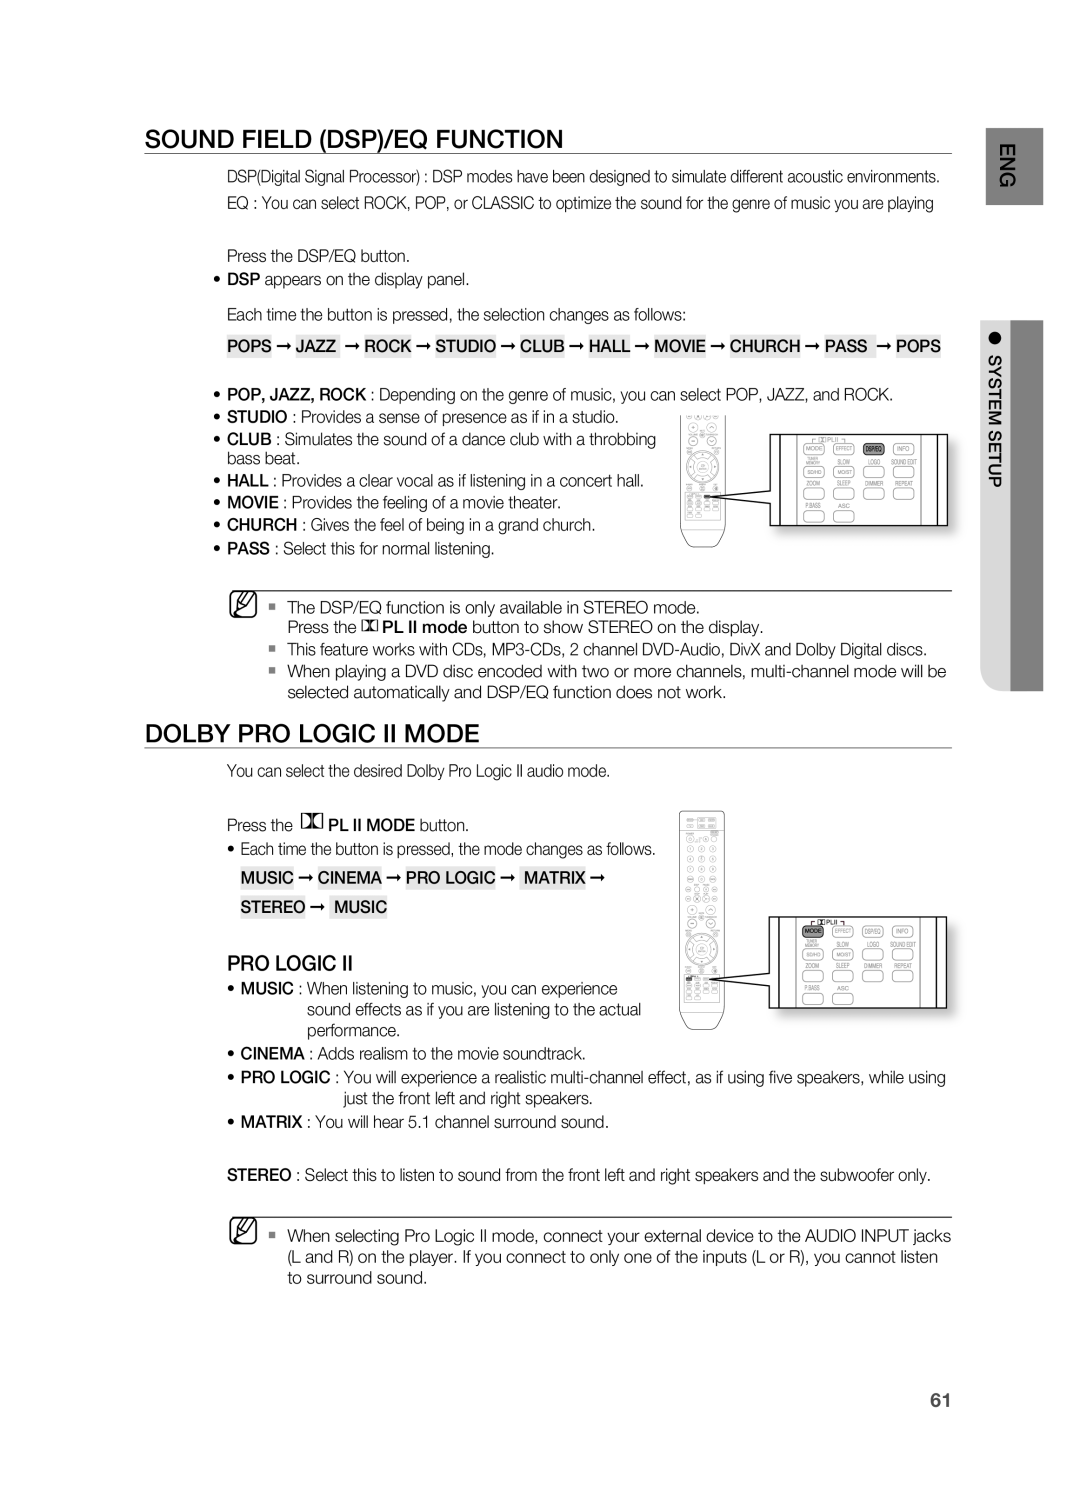 Samsung HT-Z510 manual Sound Field Dsp/Eq Function, DOLBY PrO LOgIC II MODE 